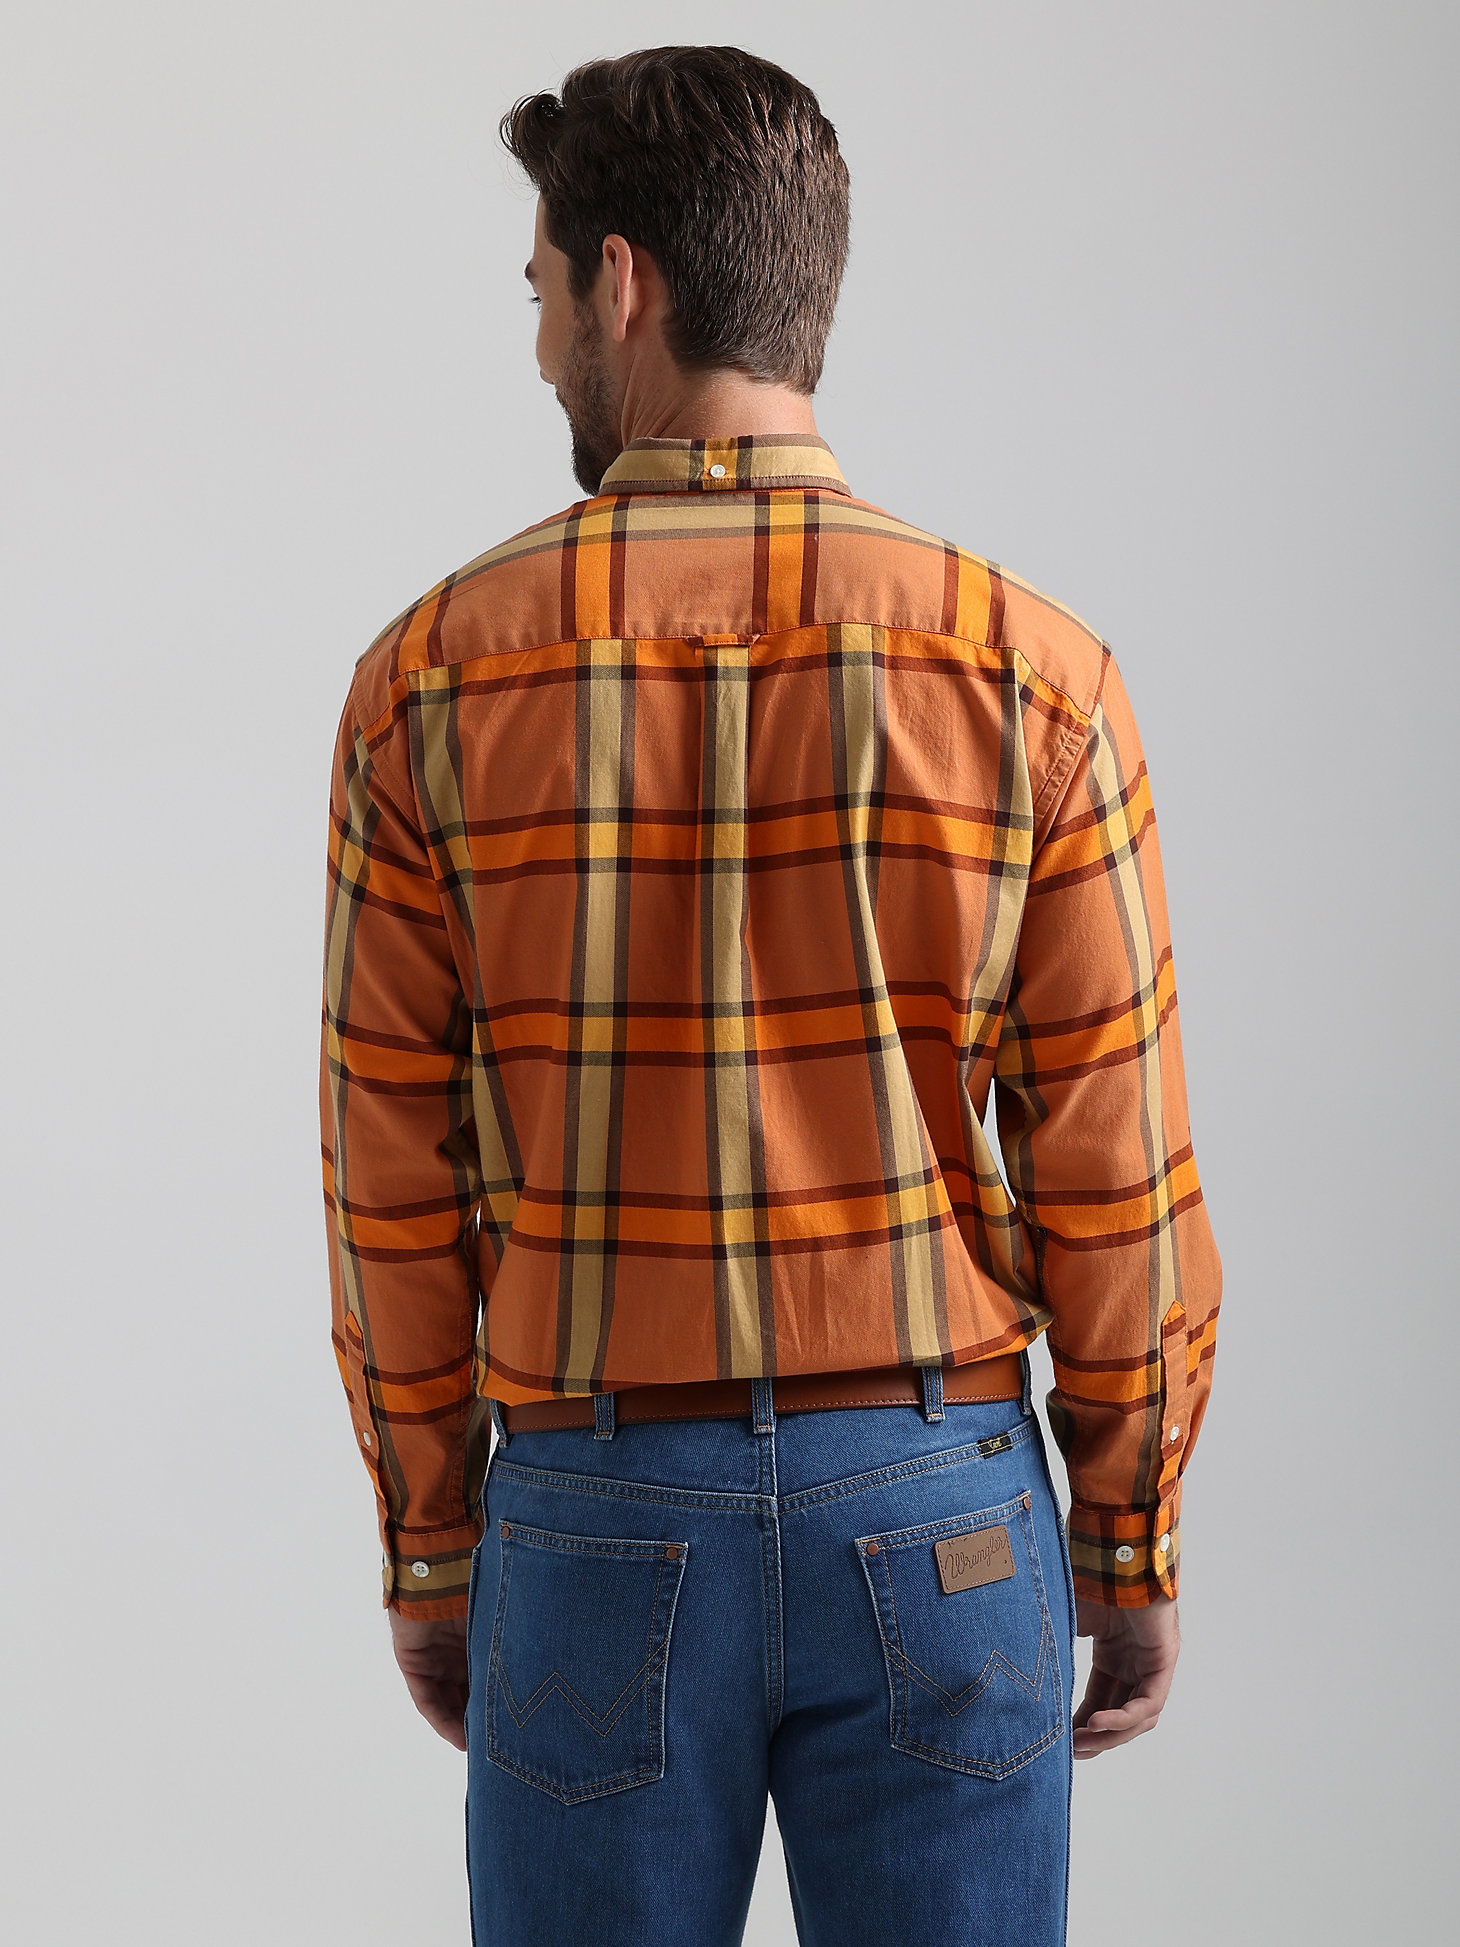 GANT x Wrangler Men's Plaid Oxford Shirt in Russet Orange alternative view 1